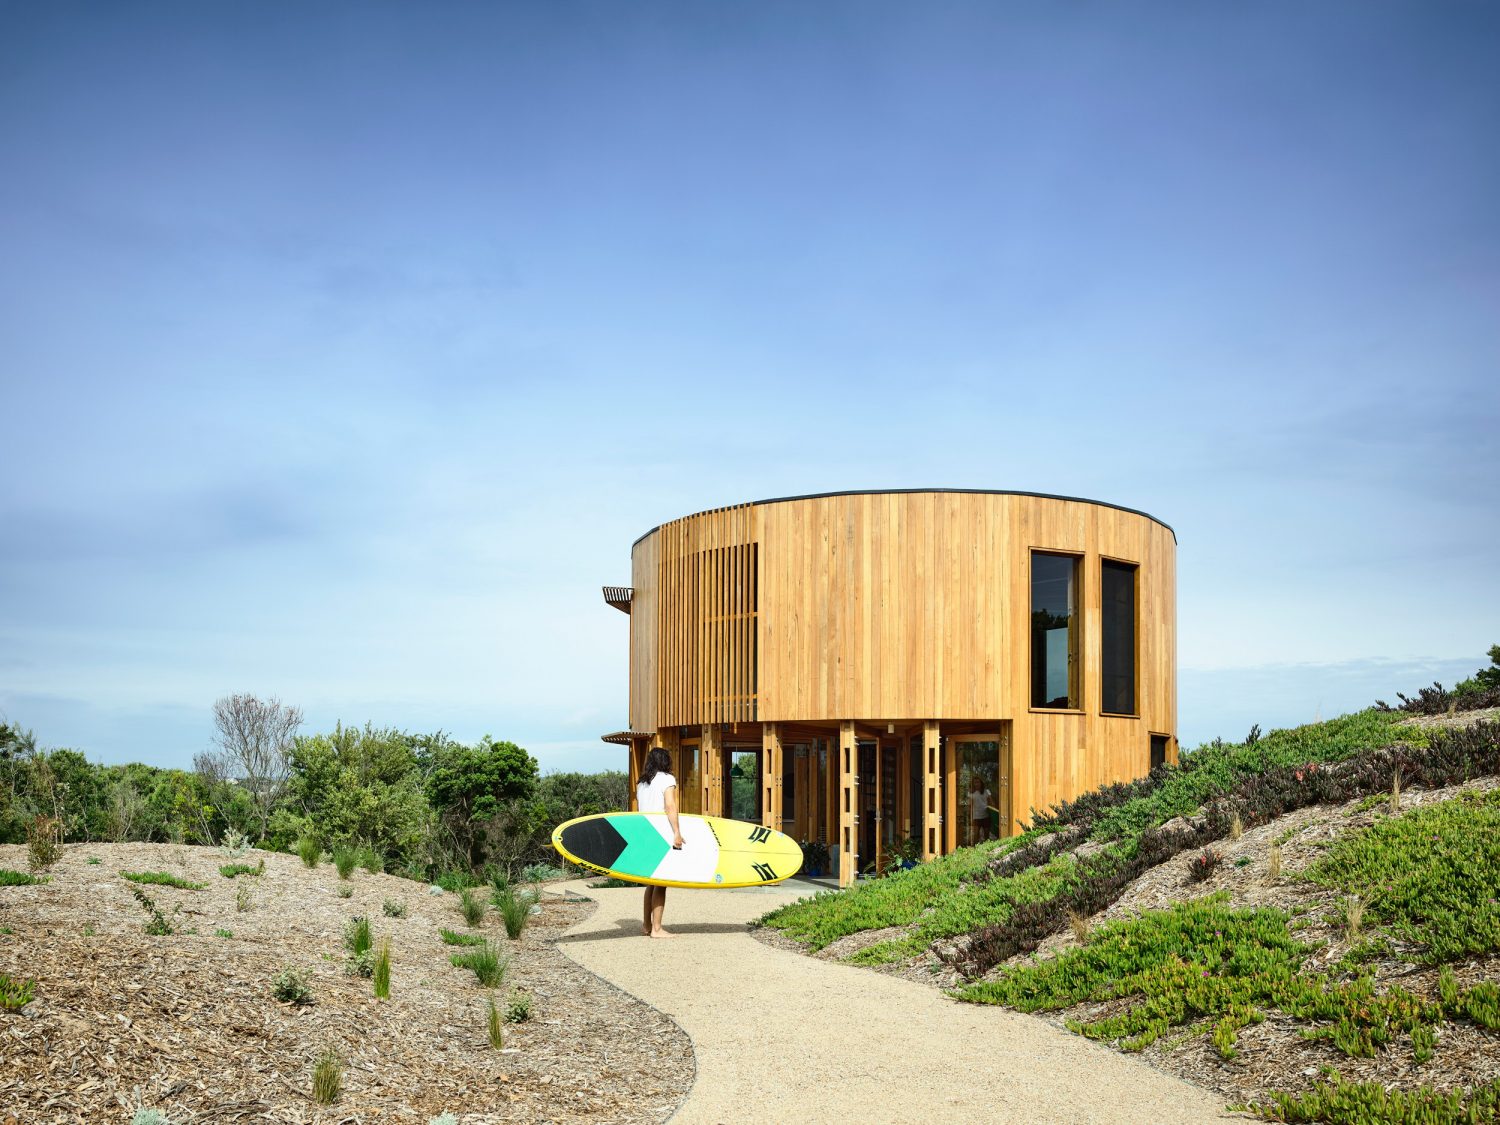 St. Andrews Beach House by Austin Maynard Architects